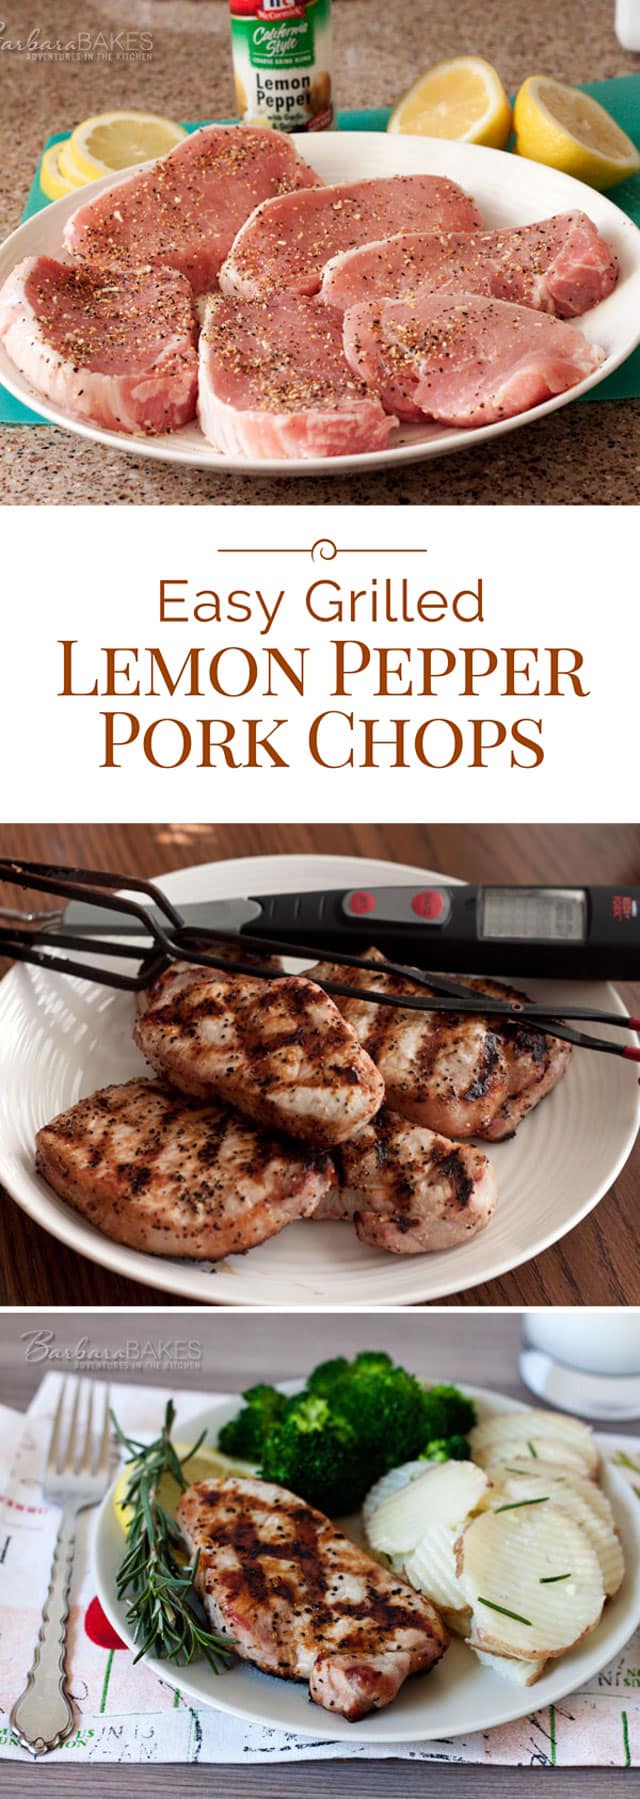 Easy Grilled Lemon Pepper Pork Chop Recipe